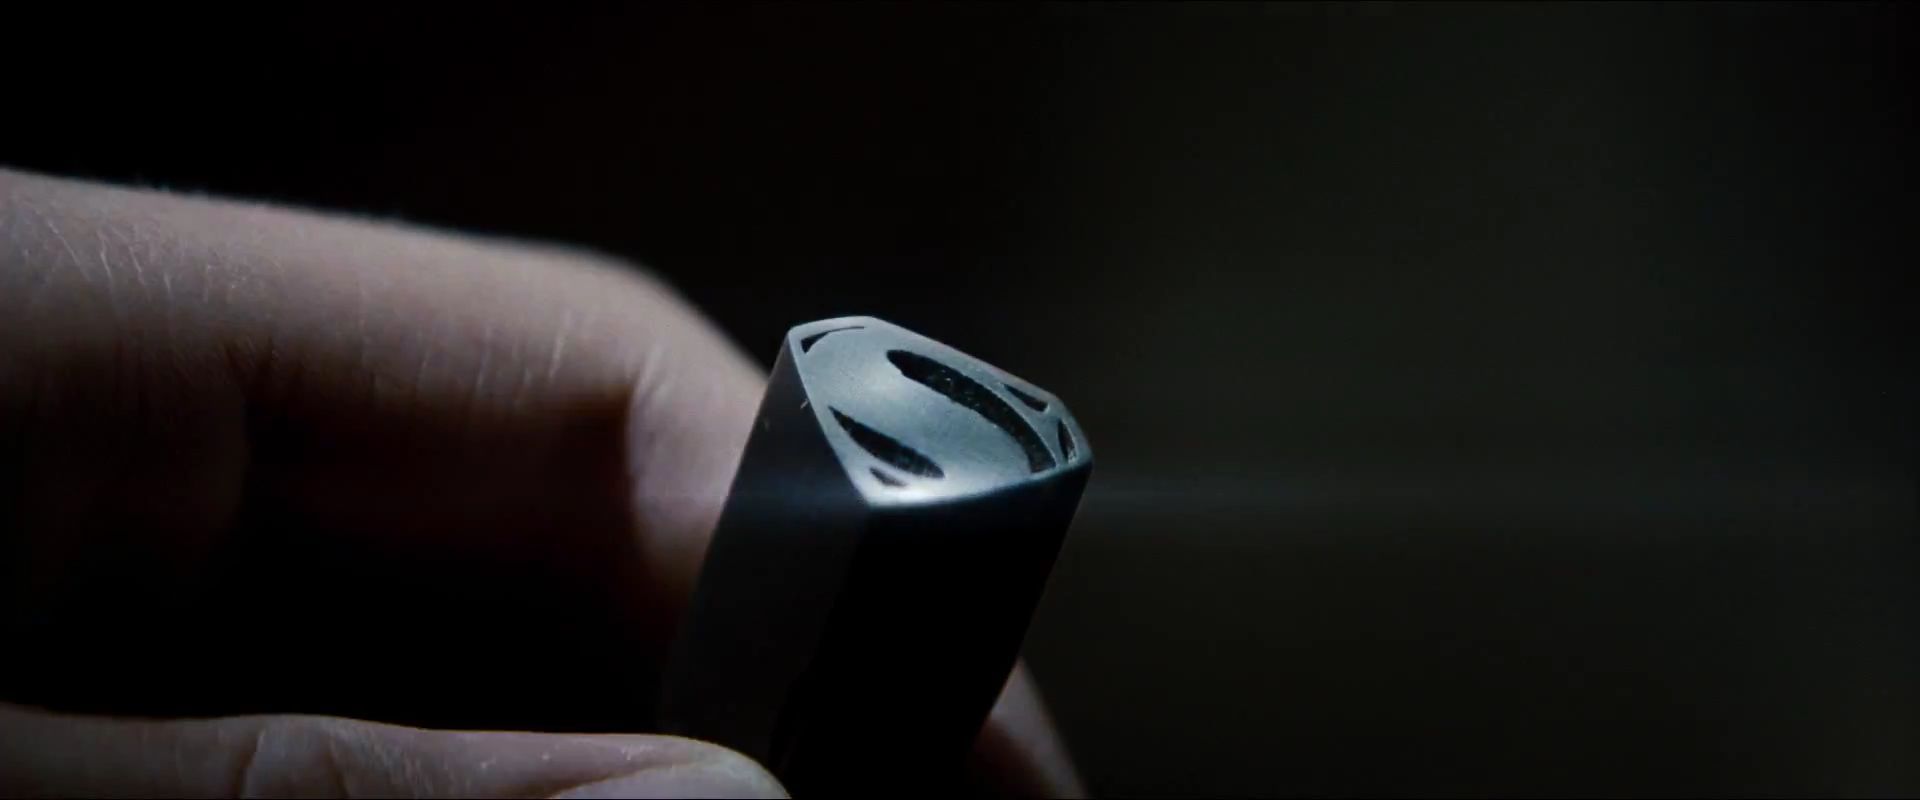 Man of Steel Trailer Images - Kryptonian Memory Stick